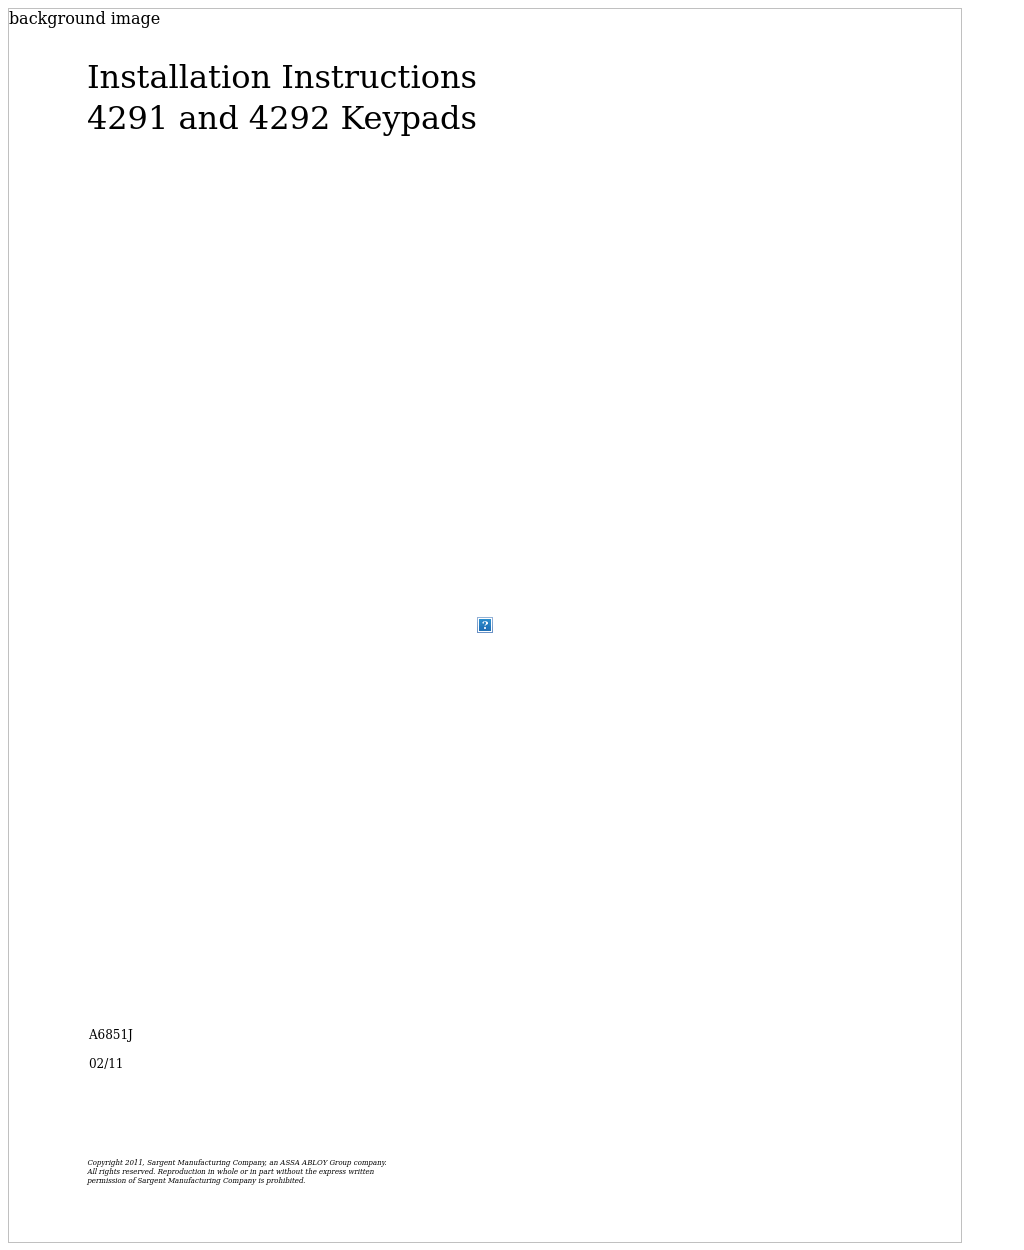 4292 Keypads